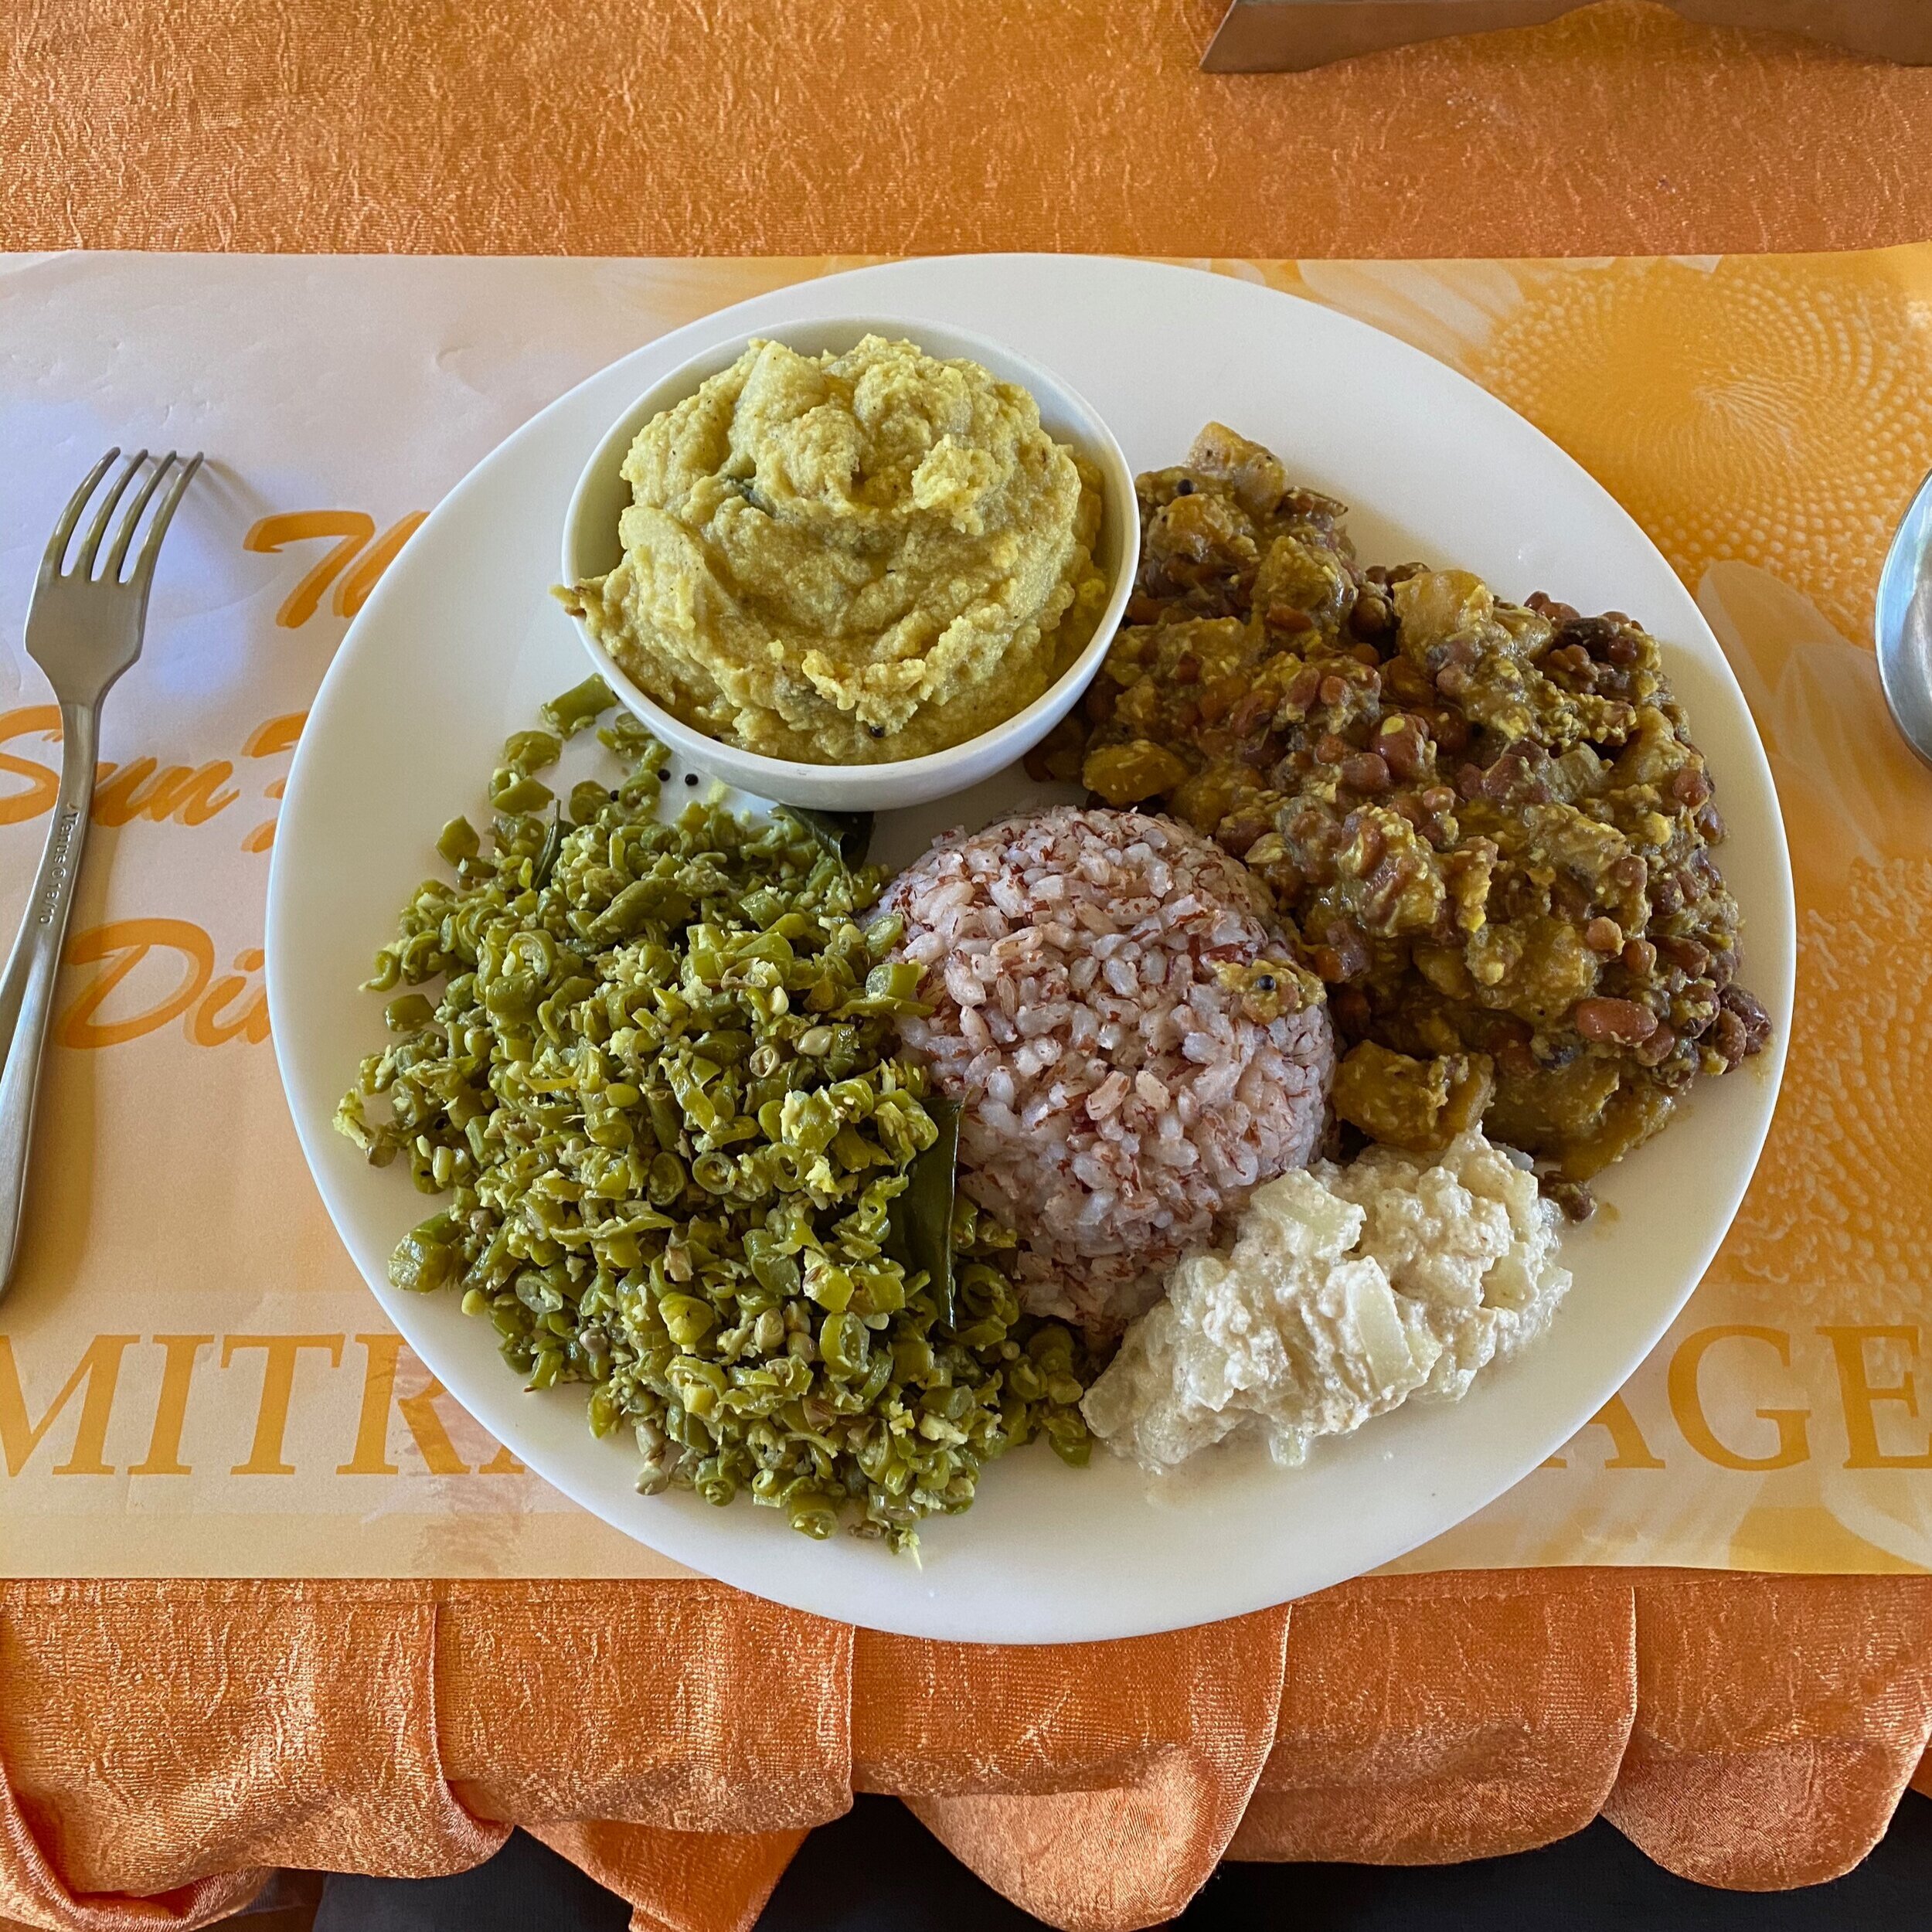 Mitra+meal+1.jpg